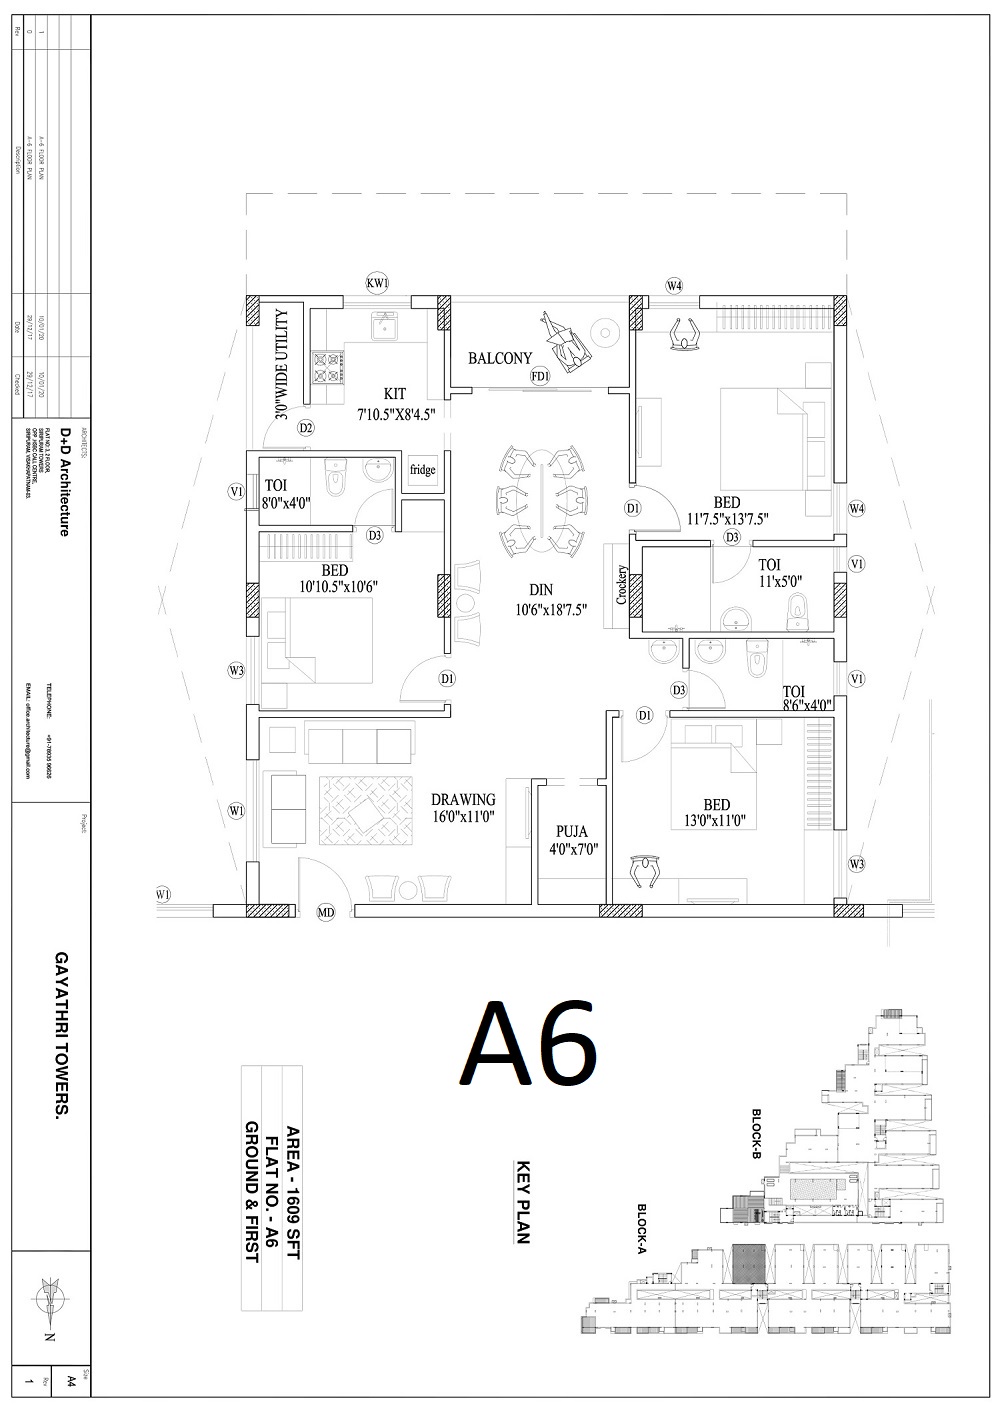 A6 - Floor Plan